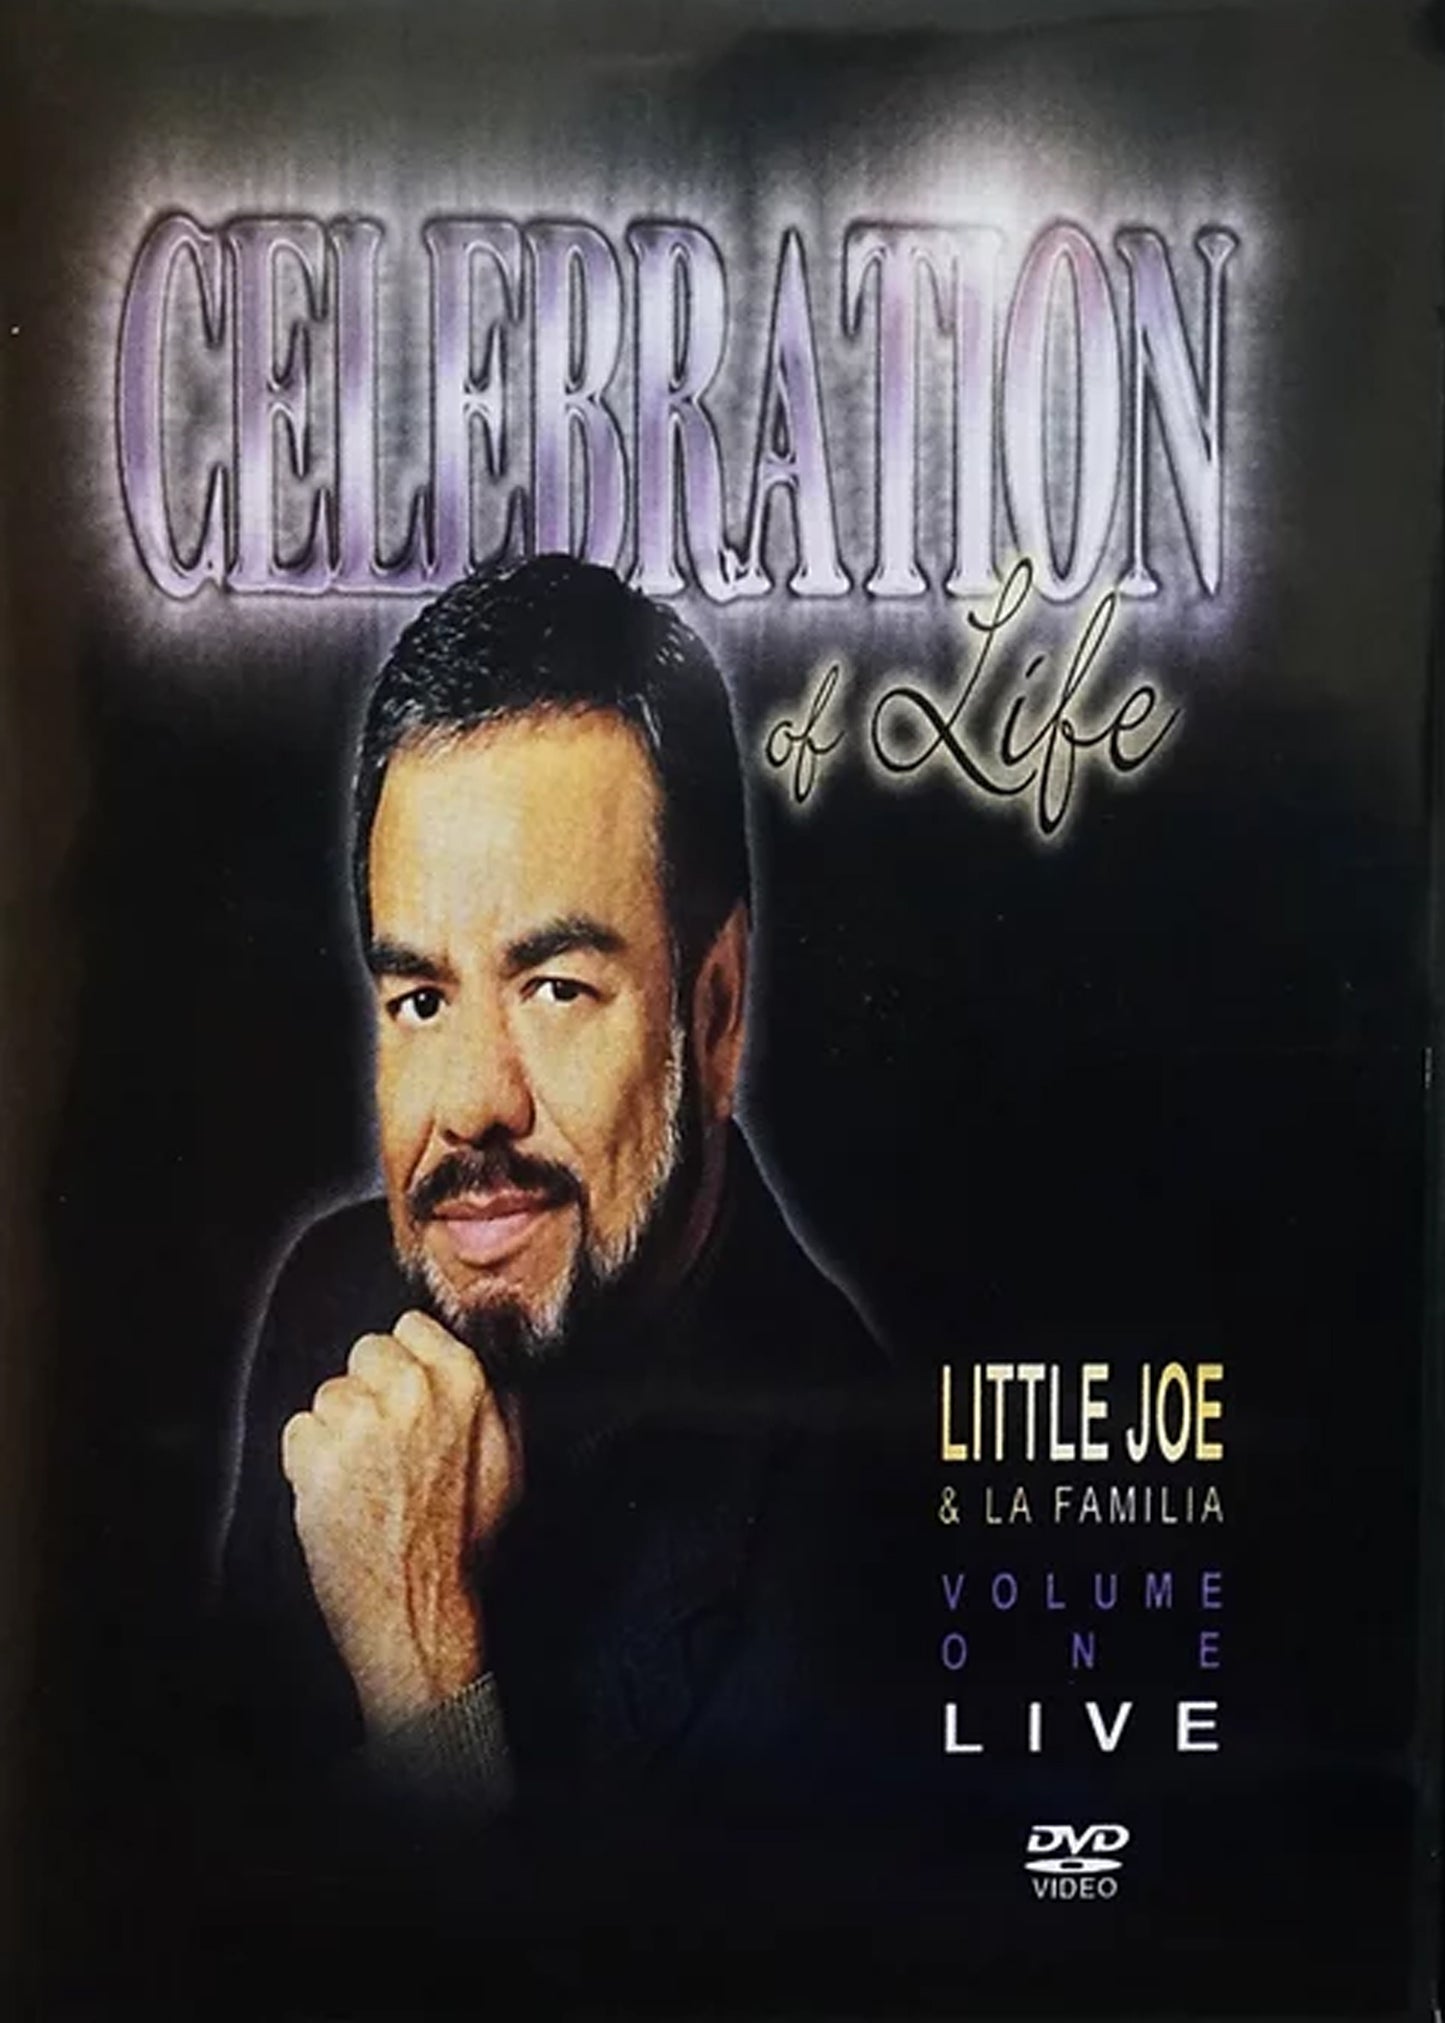 Little joe y la familia - celebración de la vida vol. 1 (DVD)